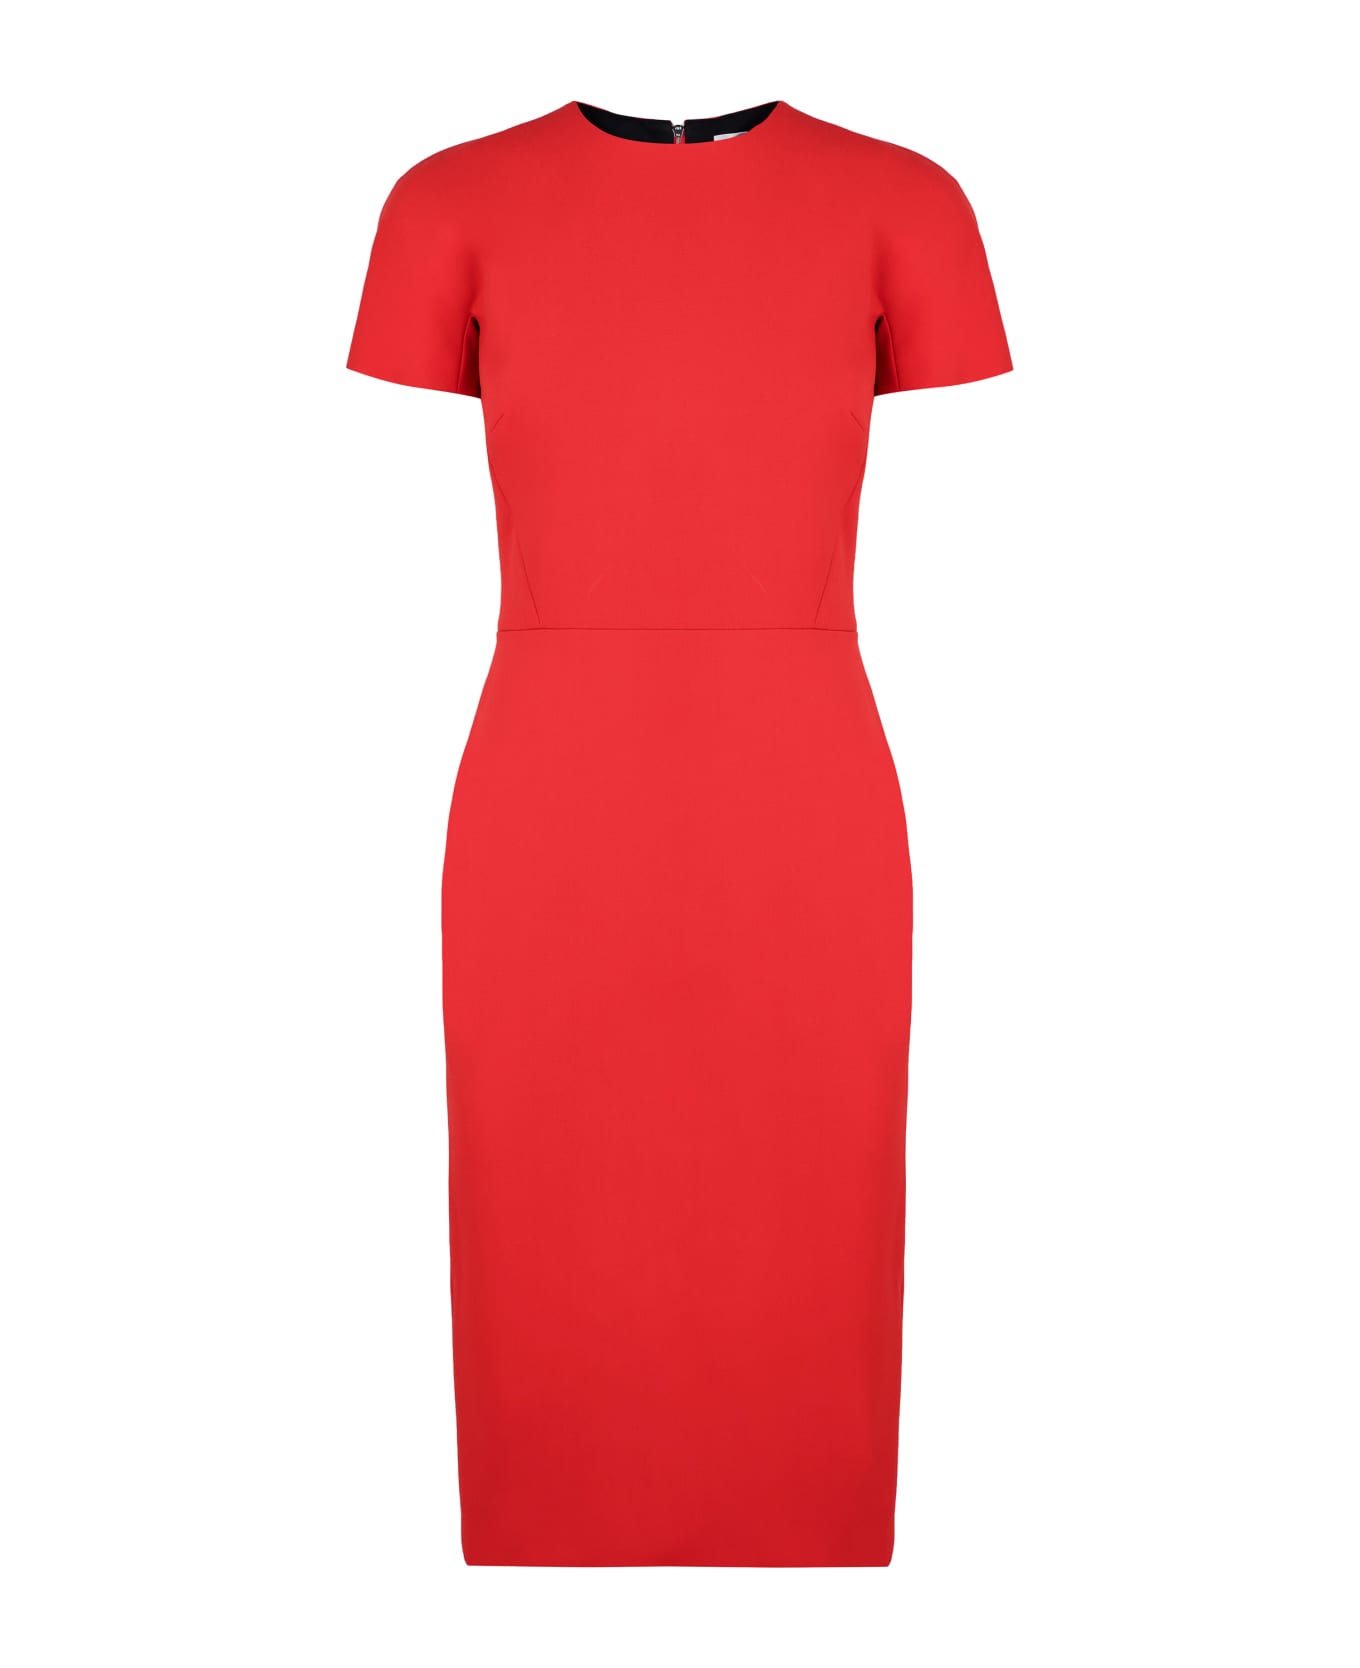 Victoria Beckham Sheath Dress - red